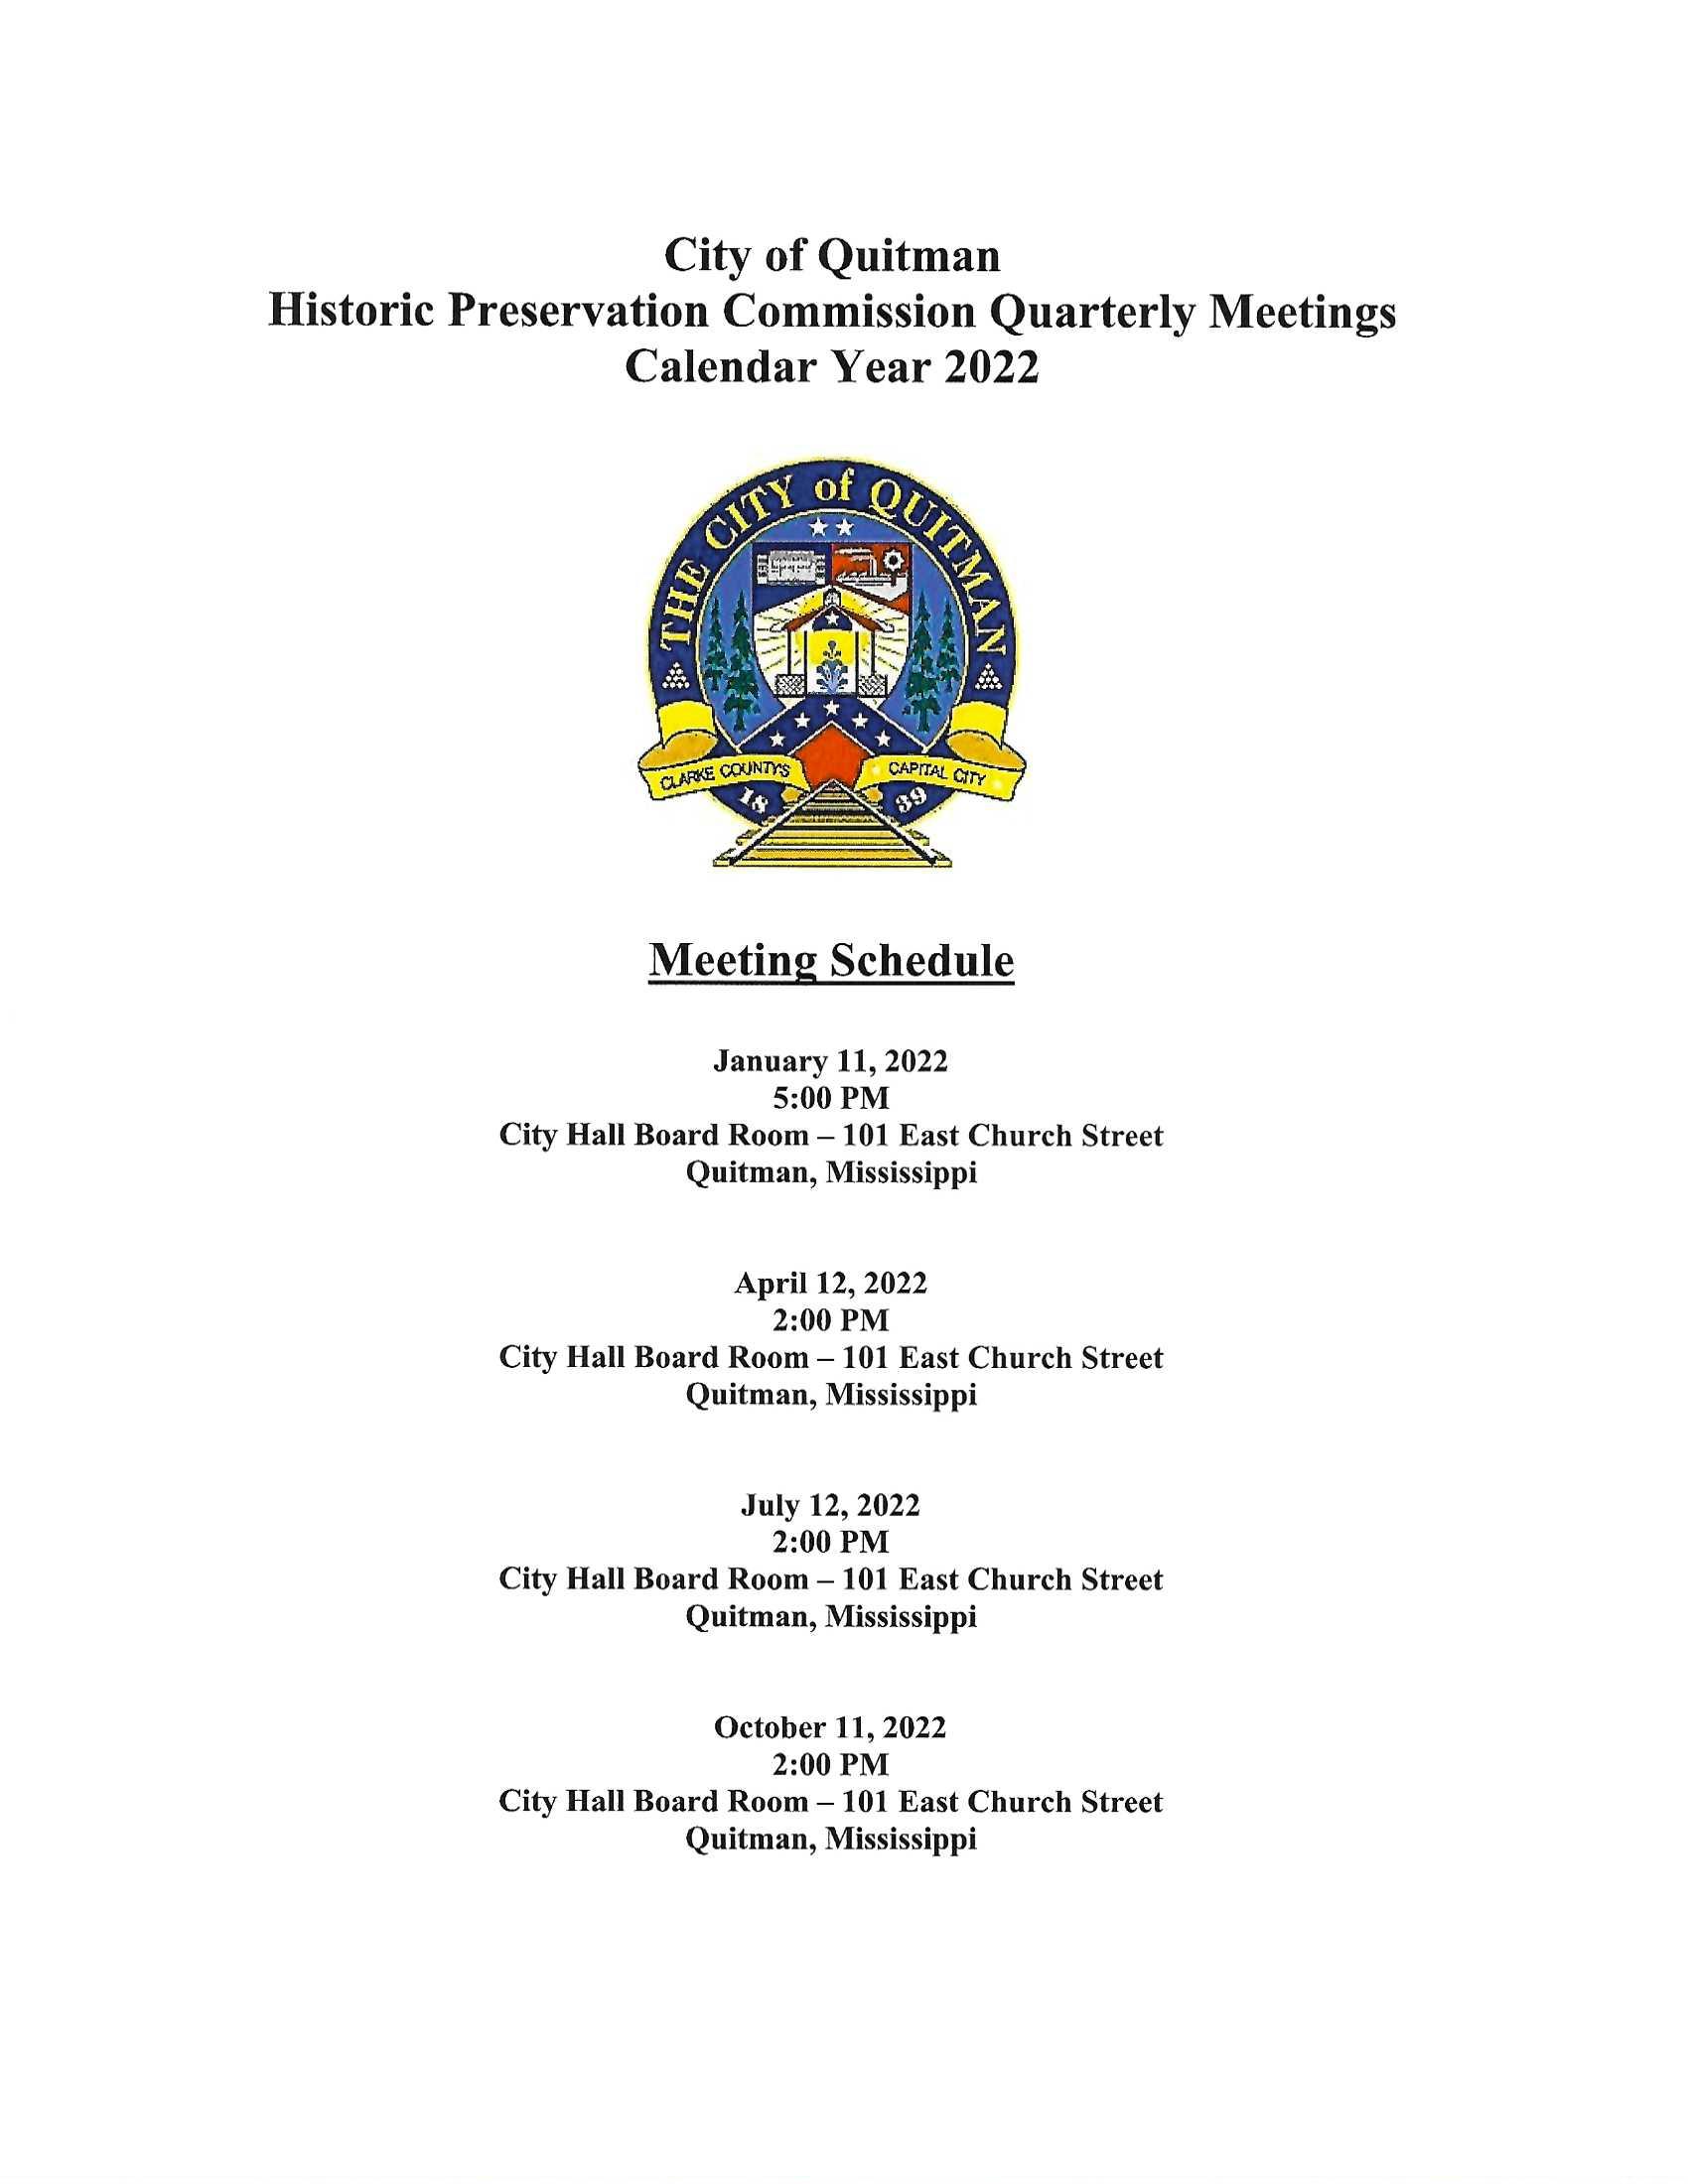 City of Quitman Historic Preservation Meeting Schedule